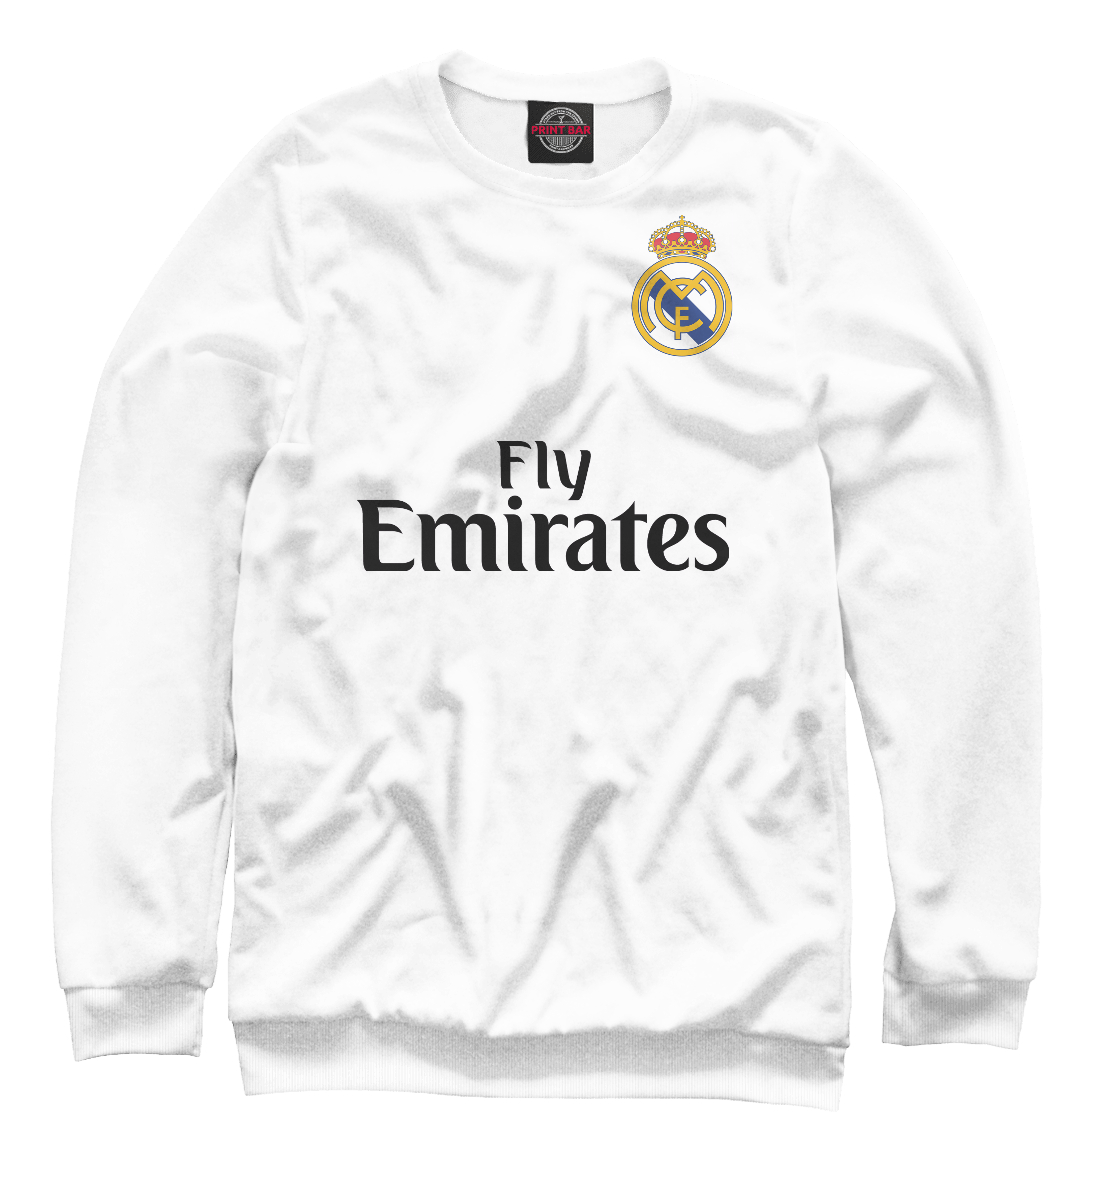 Мужской Свитшот Форма Реал Мадрид, артикул REA-876584-swi-2mp